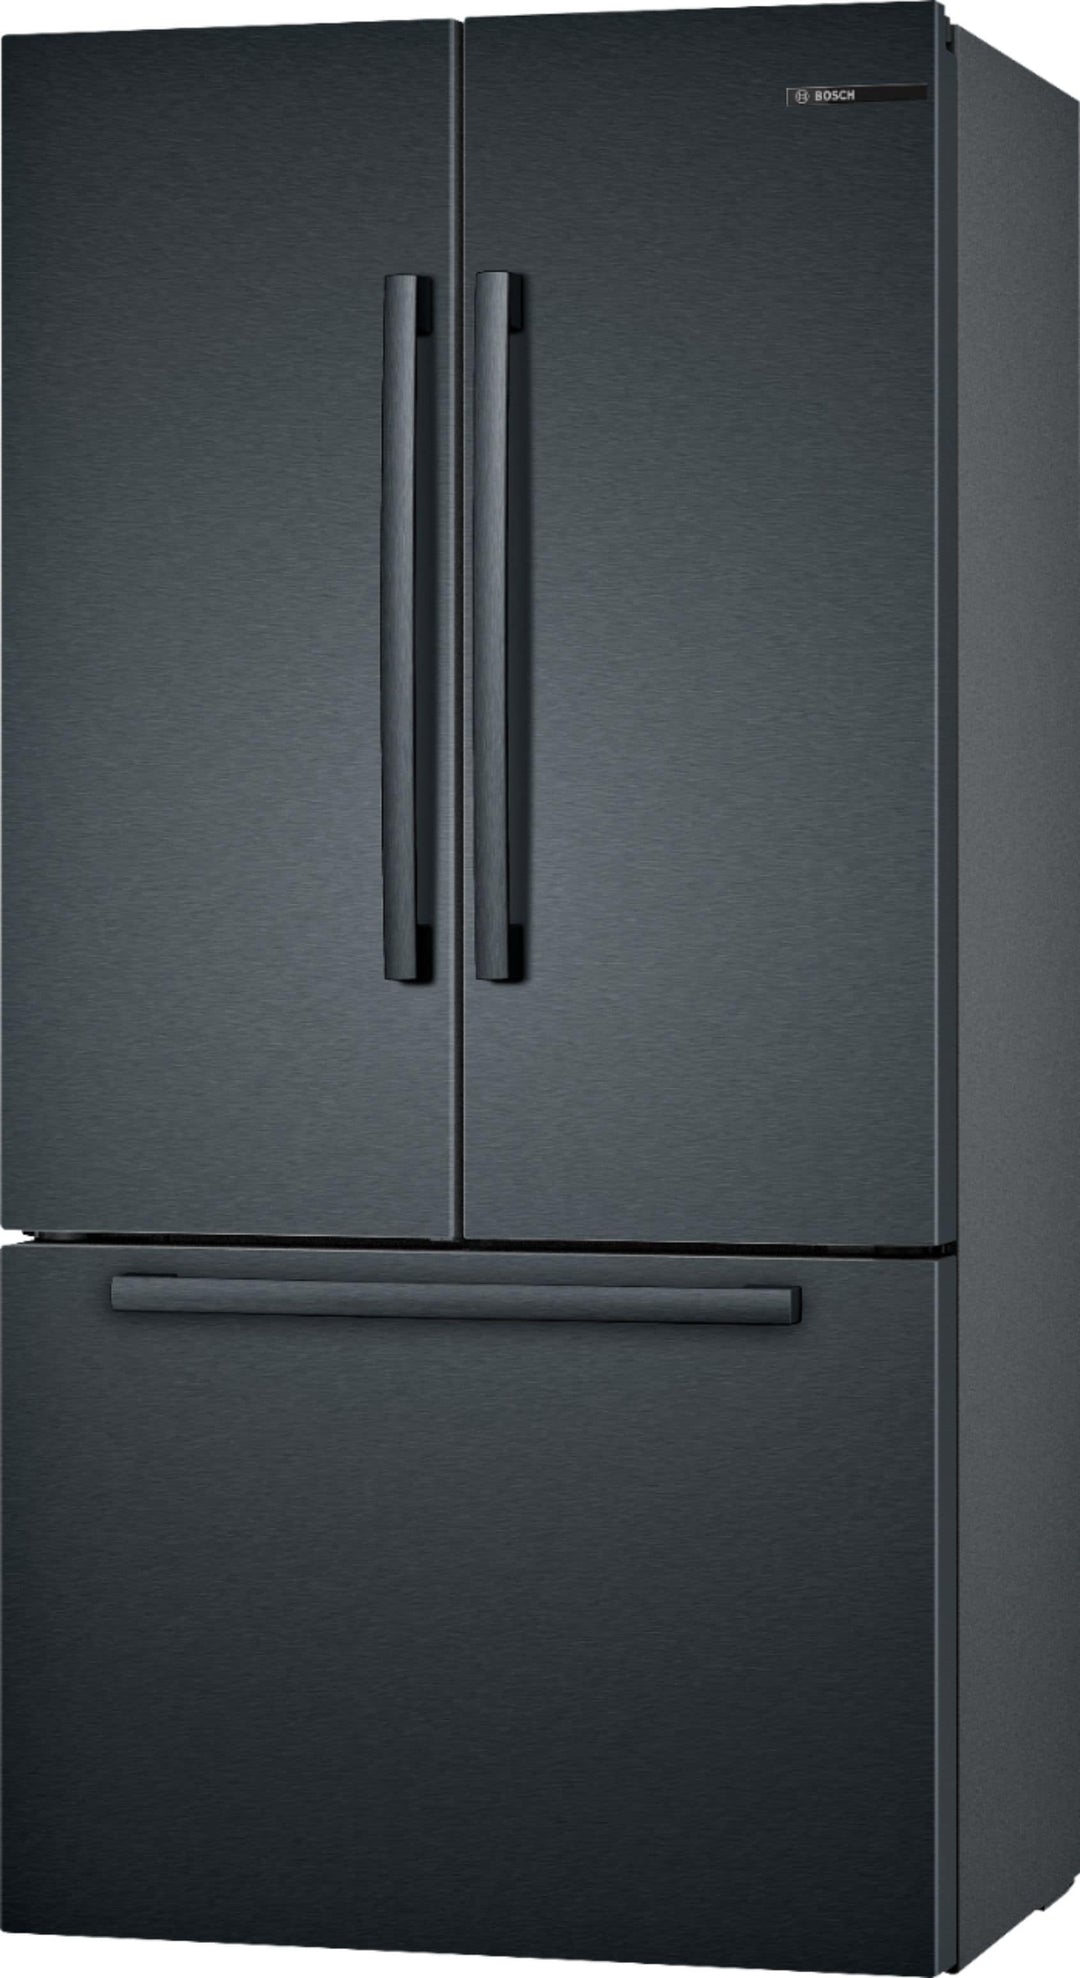 Bosch - 800 Series 21 Cu. Ft. French Door Counter-Depth Smart Refrigerator - Black stainless steel_11